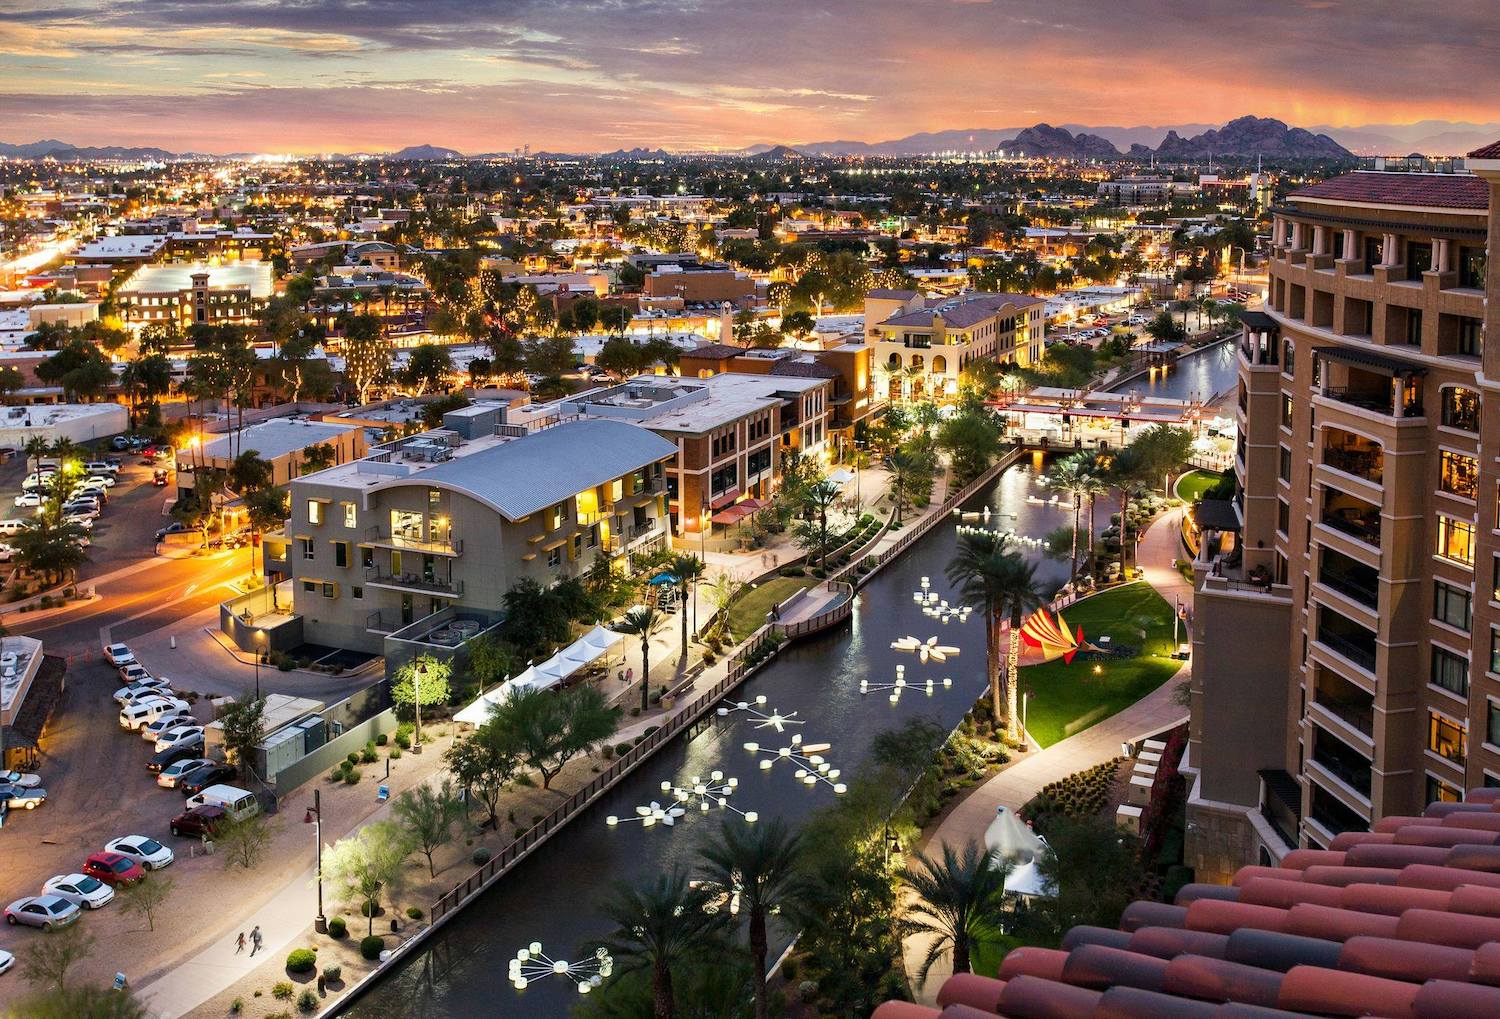 Aerial view of popular travel destination Scottsdale, Arizona at sunset